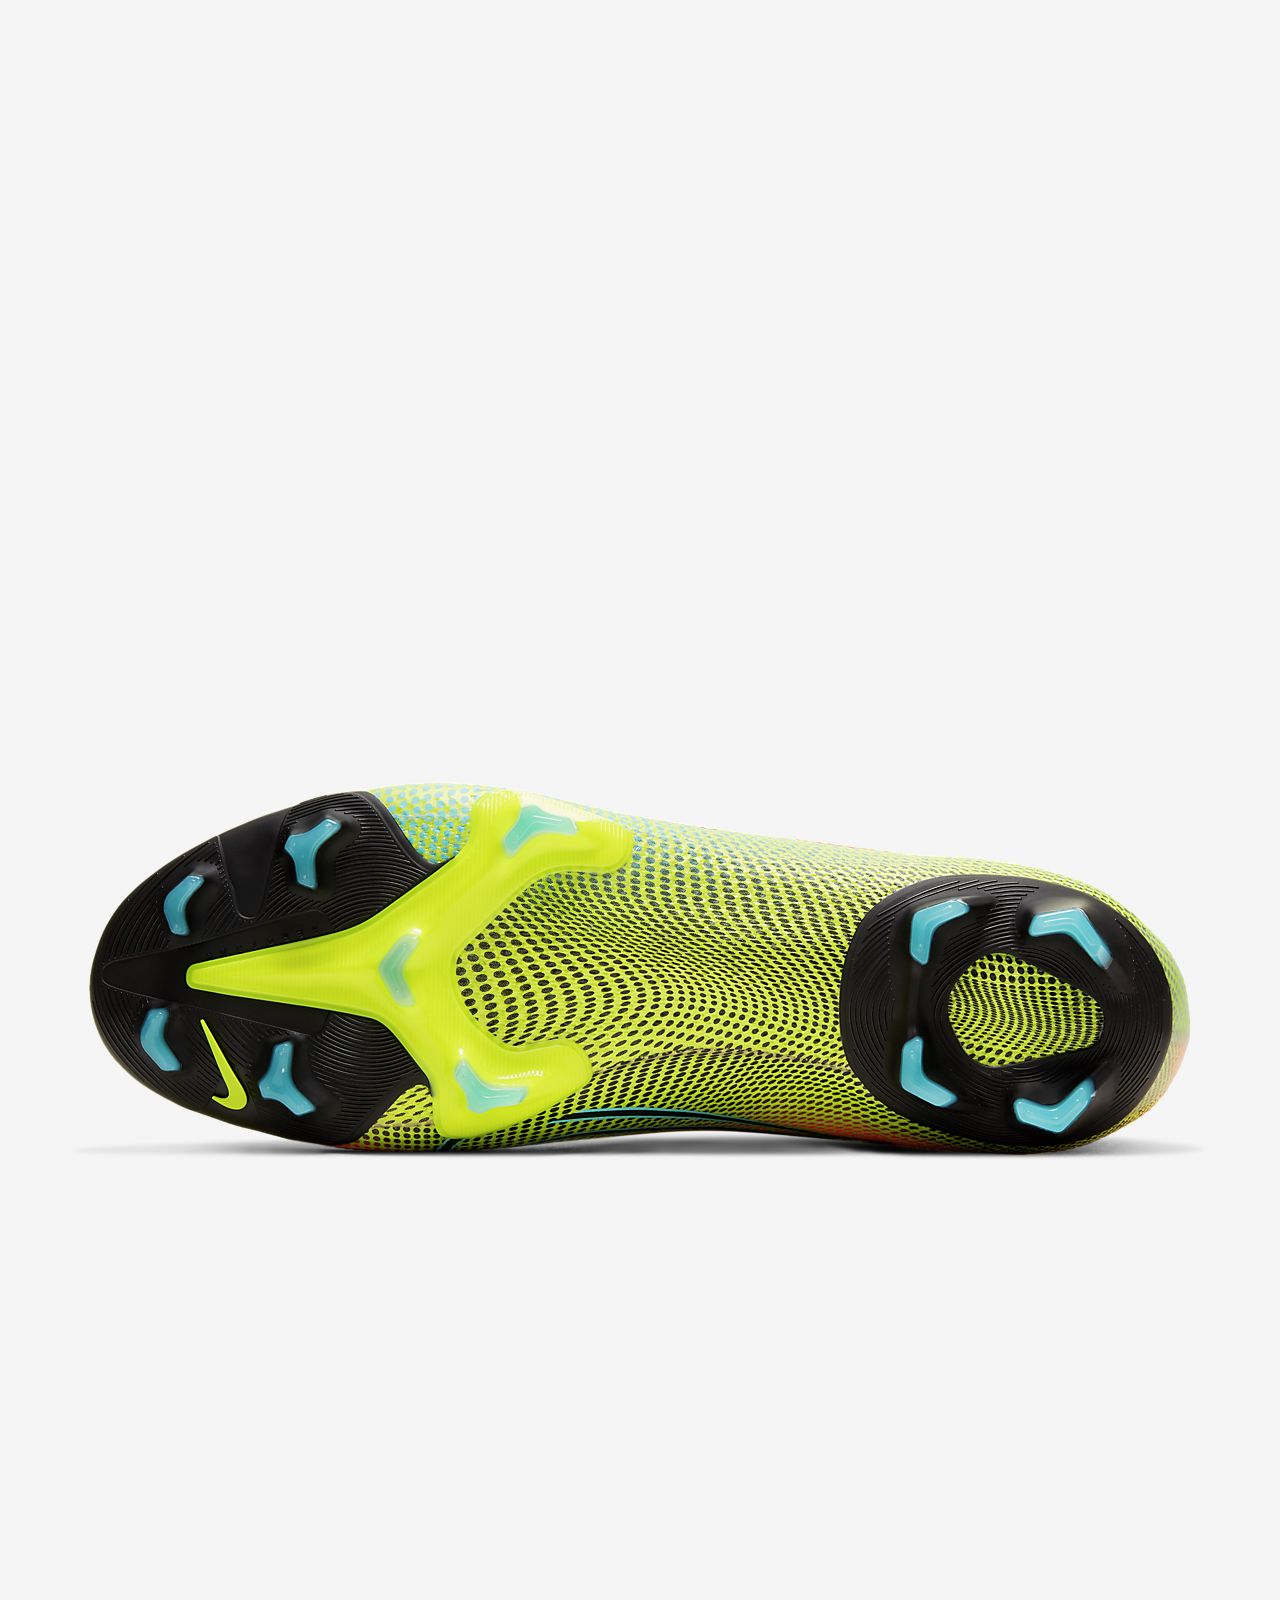 Nike Mercurial Superfly V SG Pro Volt Size 12. Amazon.com